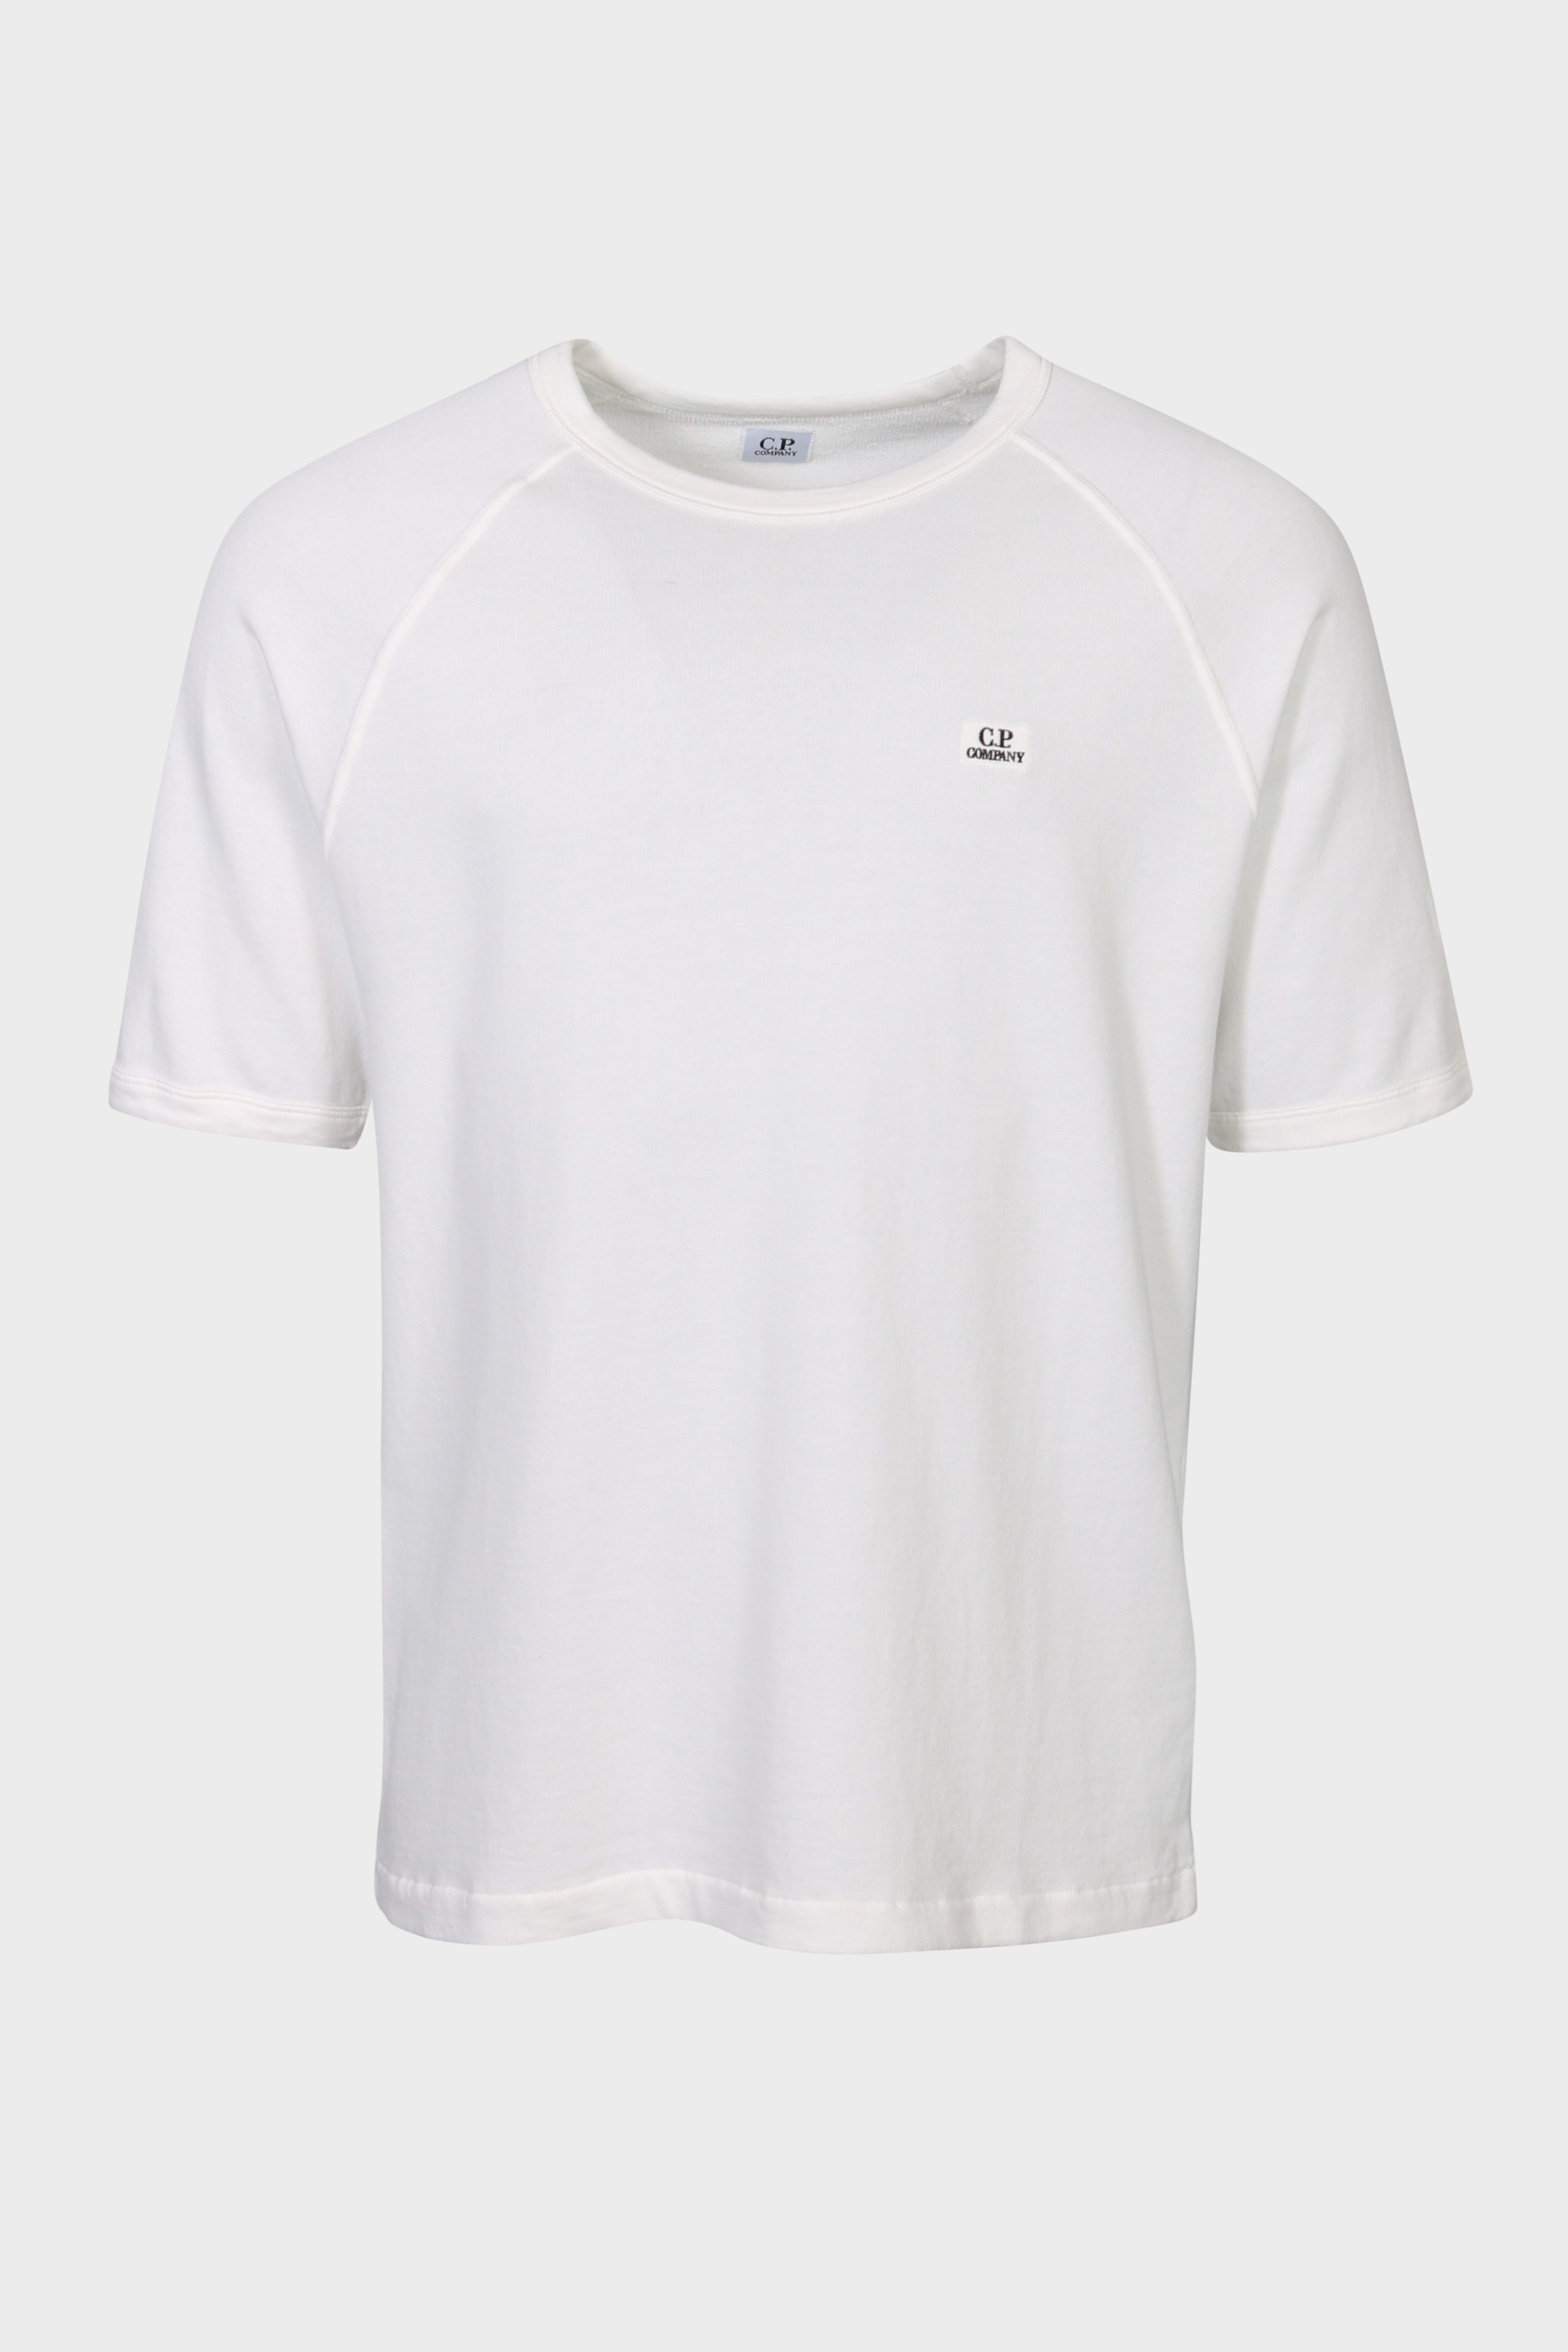 C.P. COMPANY Light Short Sleeve Sweatshirt in White L